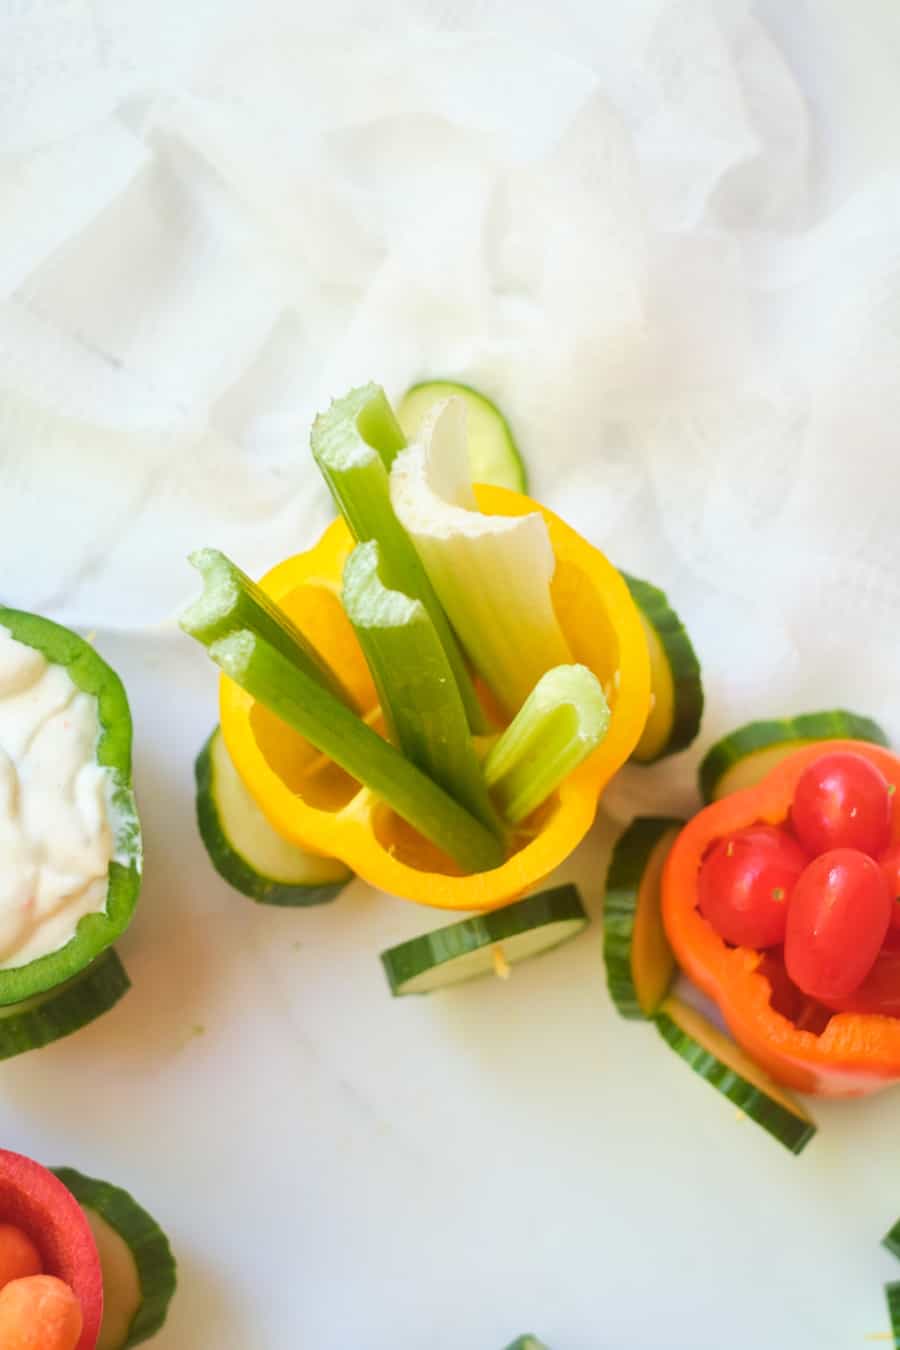 veggie train healthy snack for kids